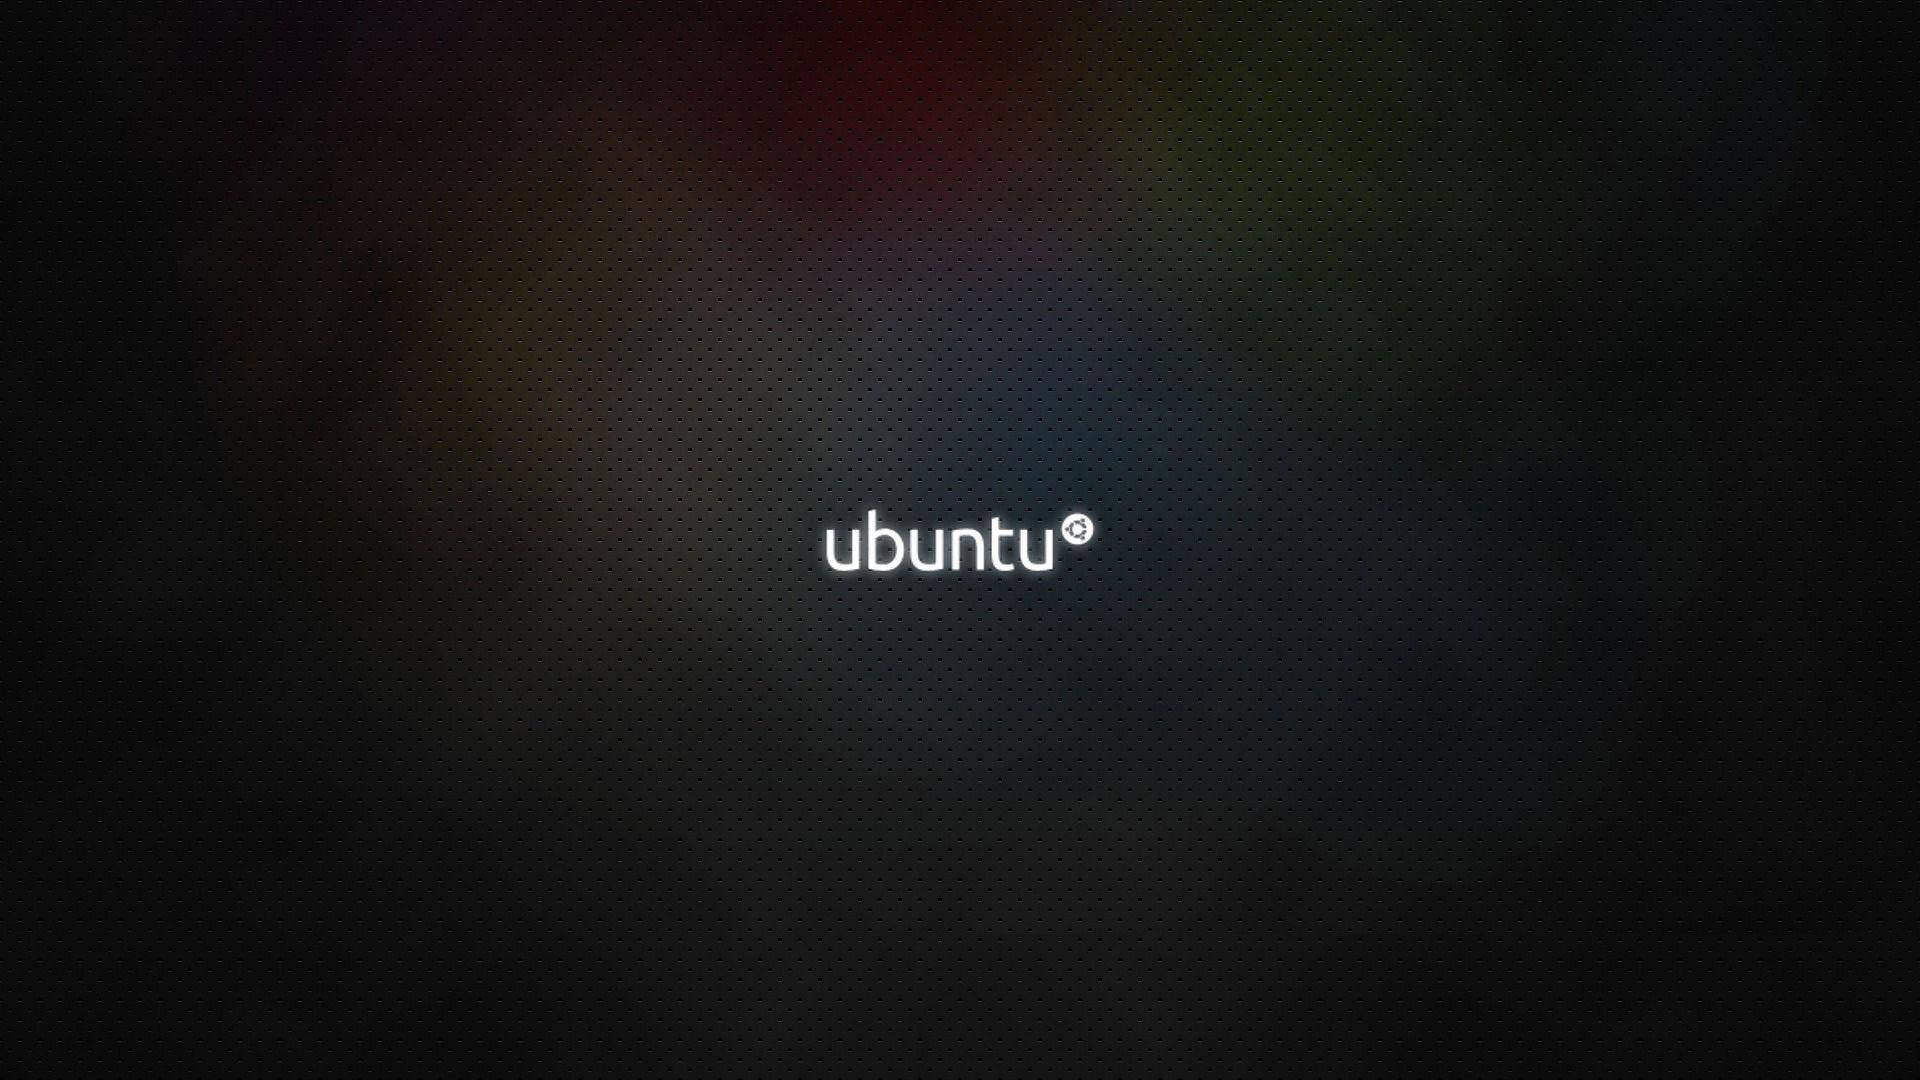 Simple Linux Desktop Ubuntu Logo Background